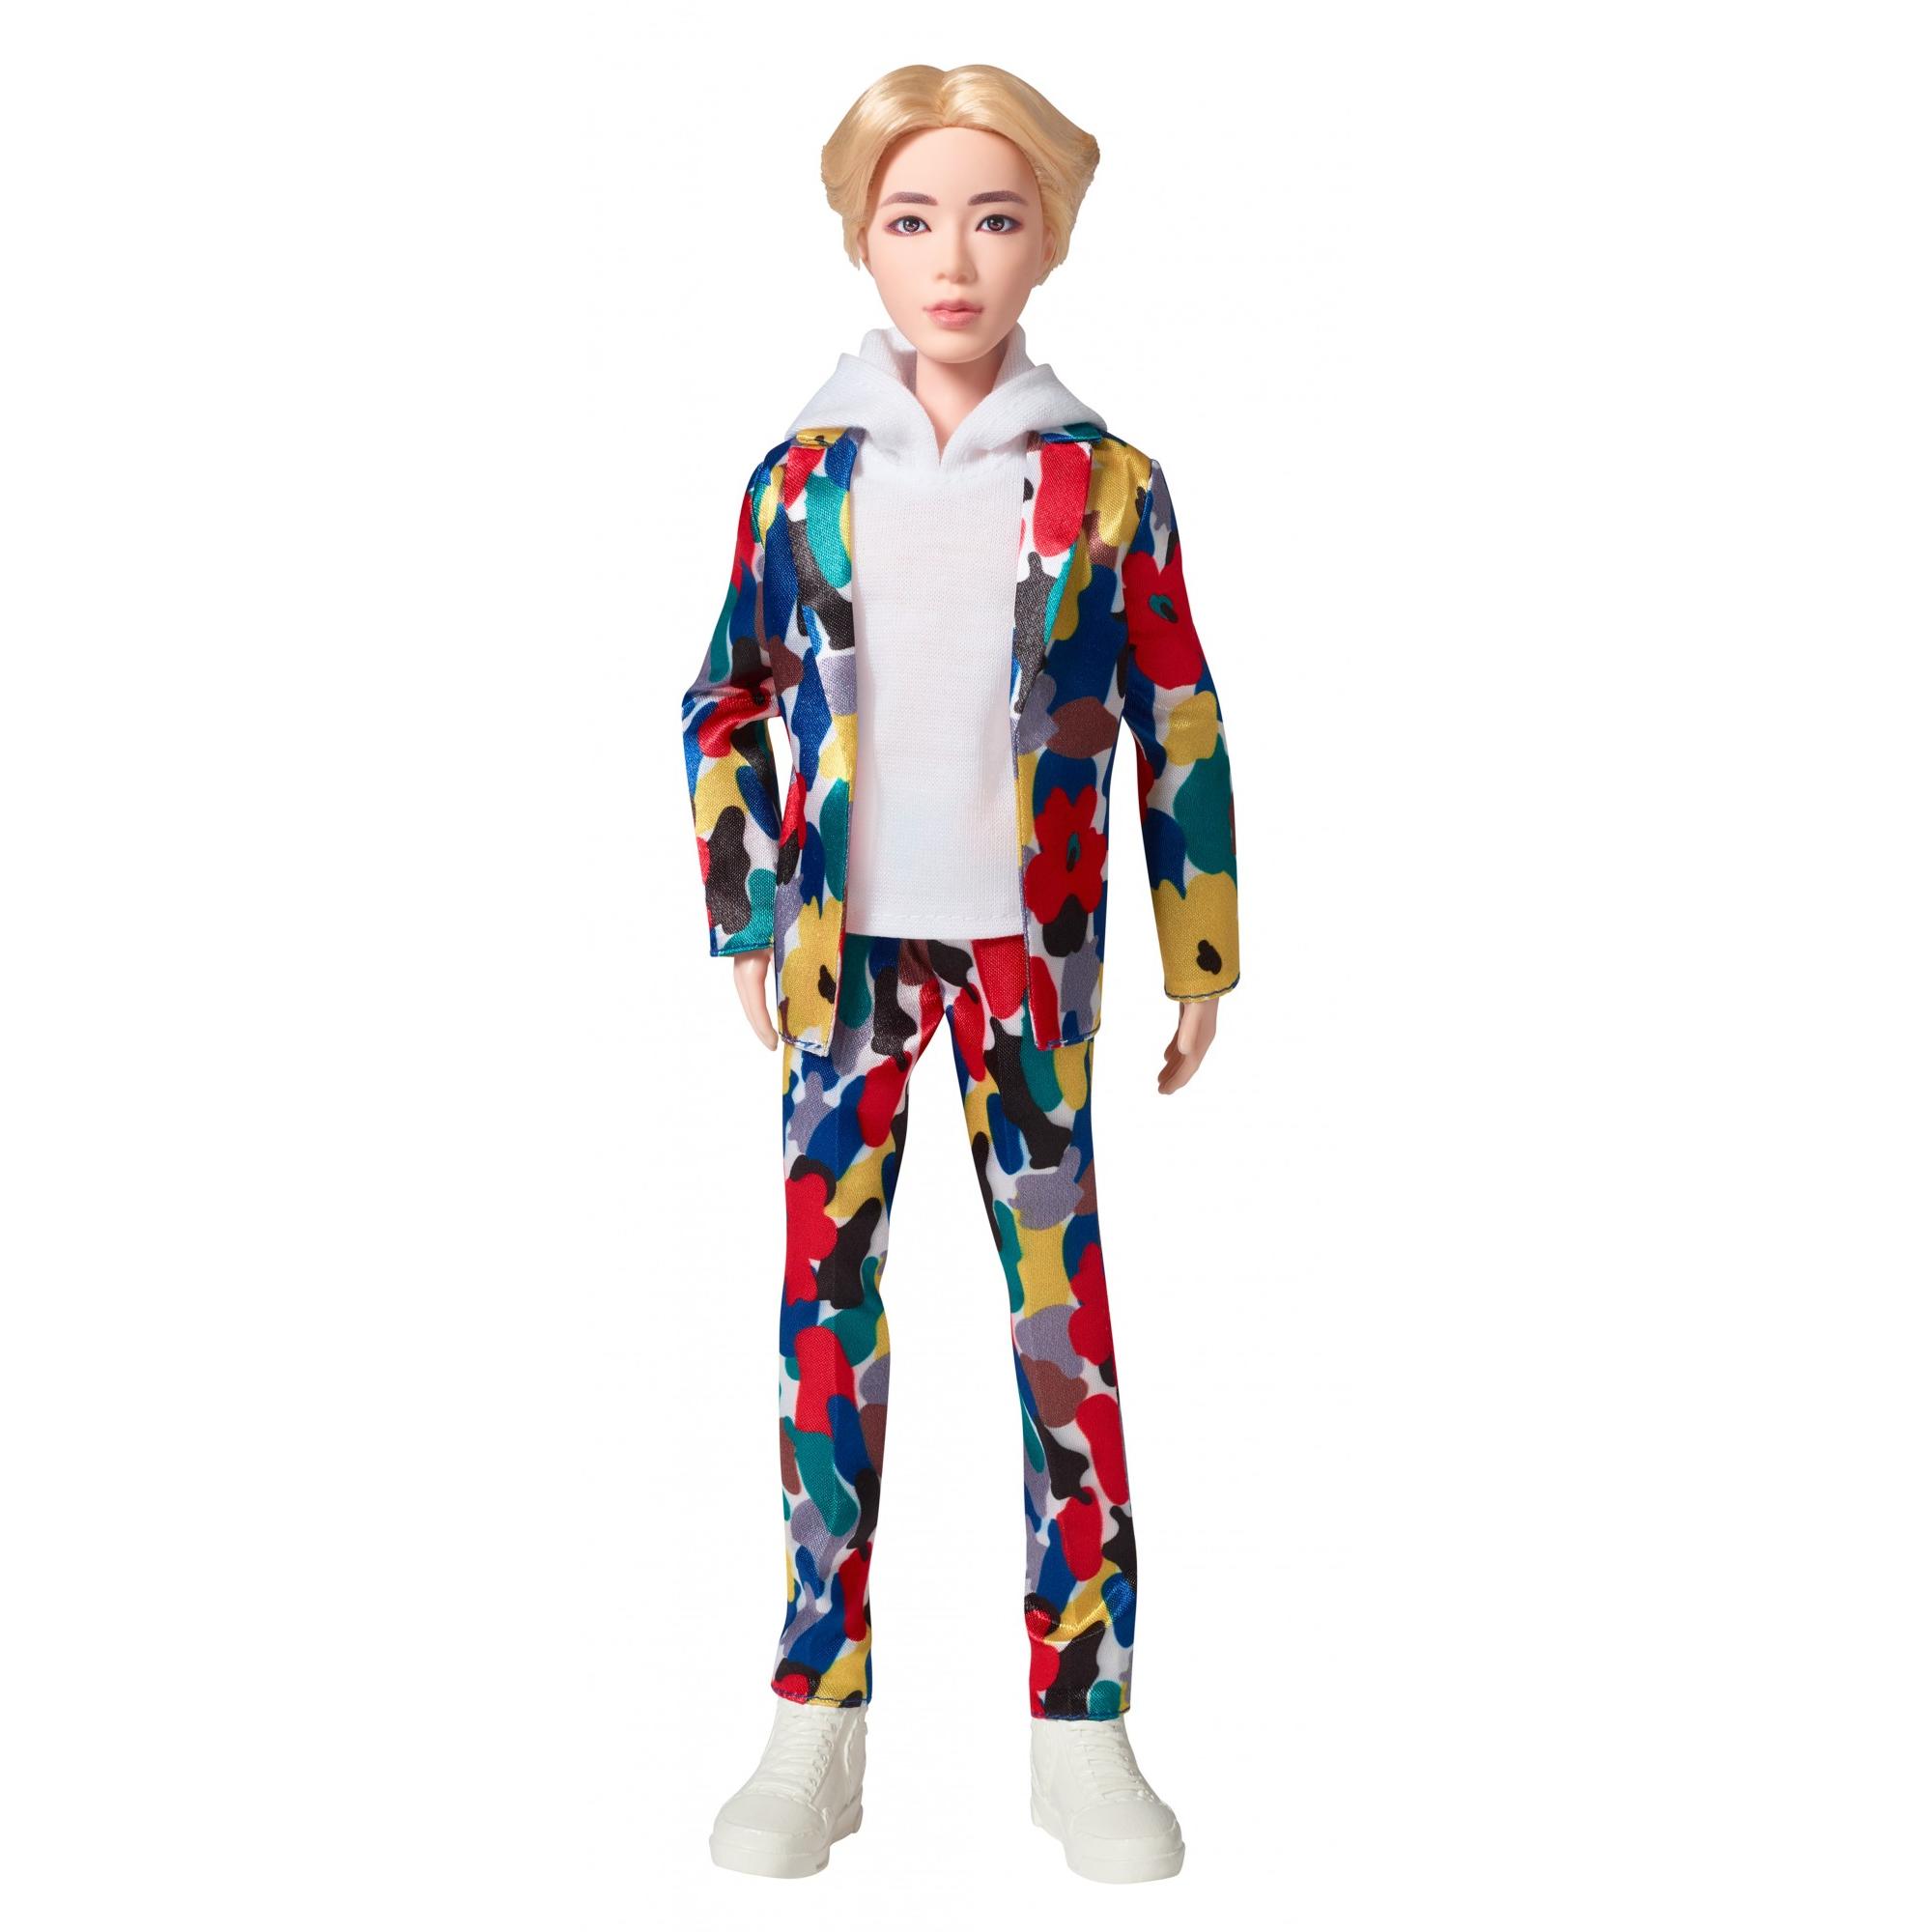 Bts Jin Idol Doll - image 1 of 8